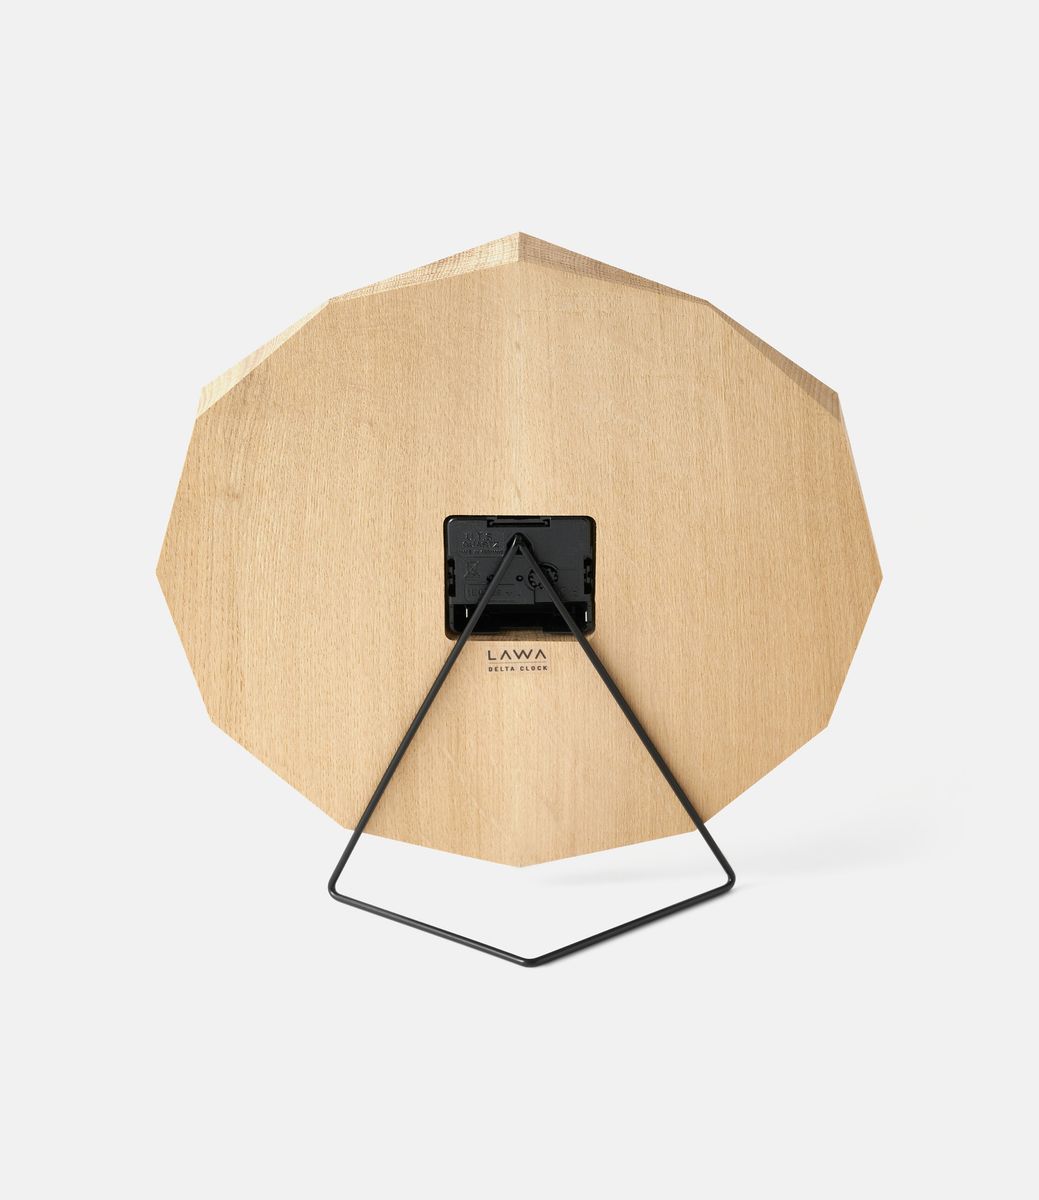 Lawa Design Delta Stand Black — подставка для настенных часов